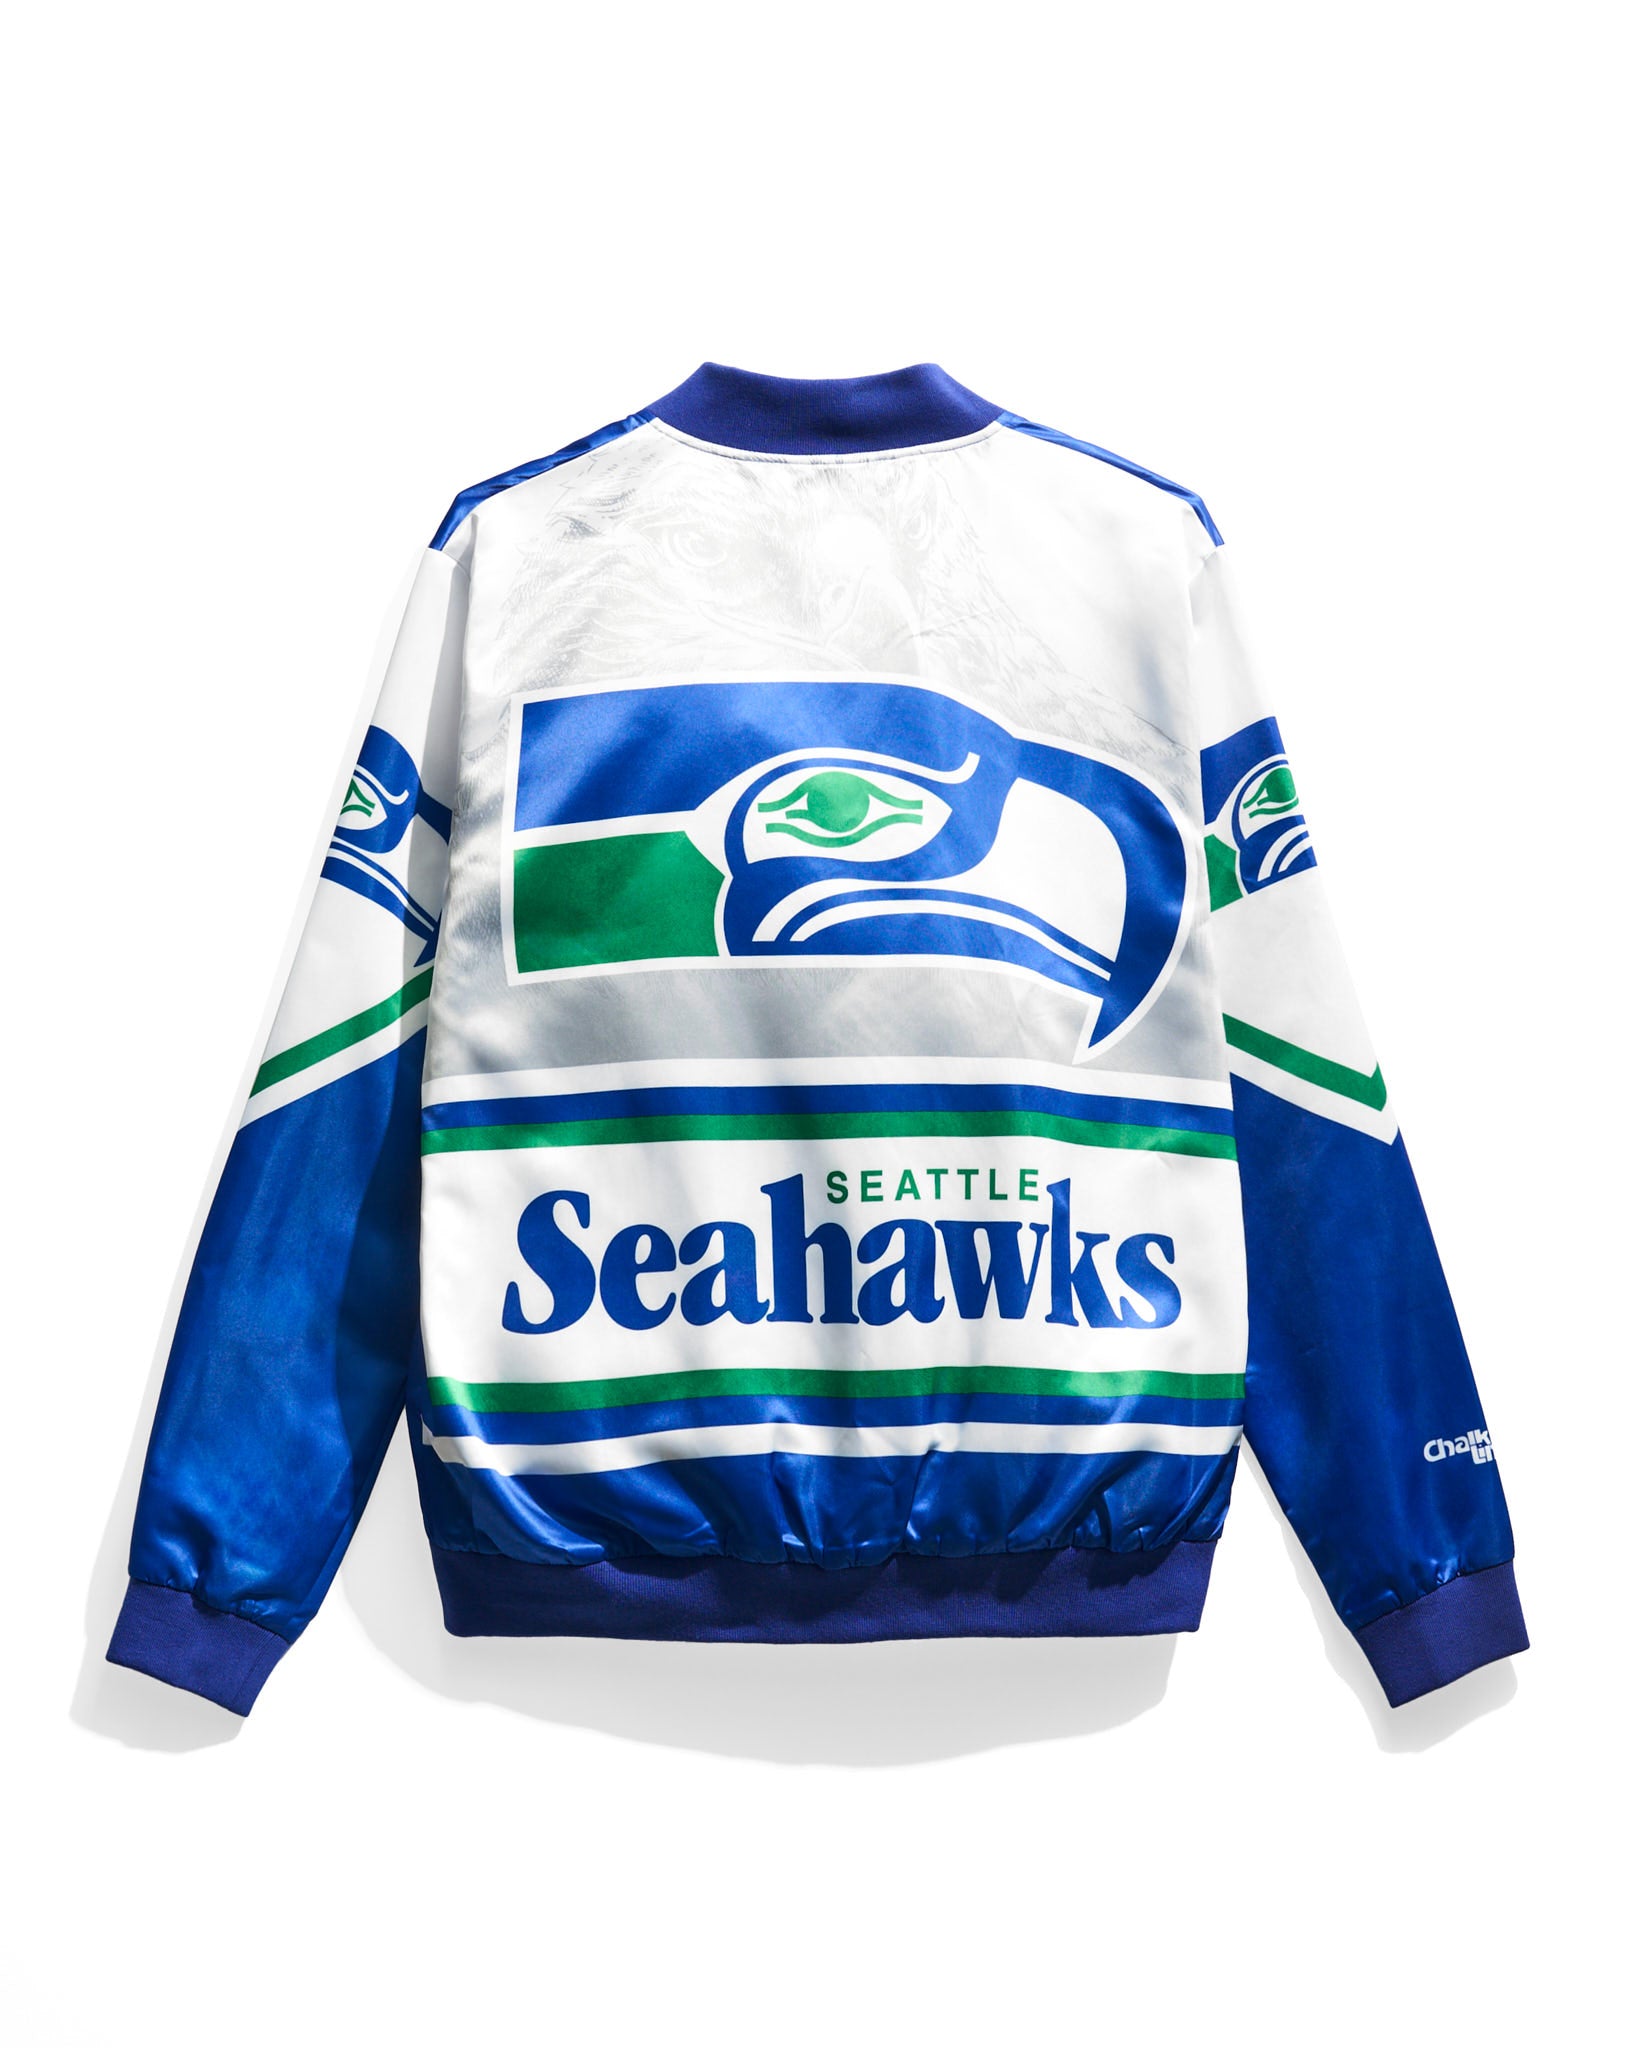 Seattle Seahawks Fanimation Satin Jacket